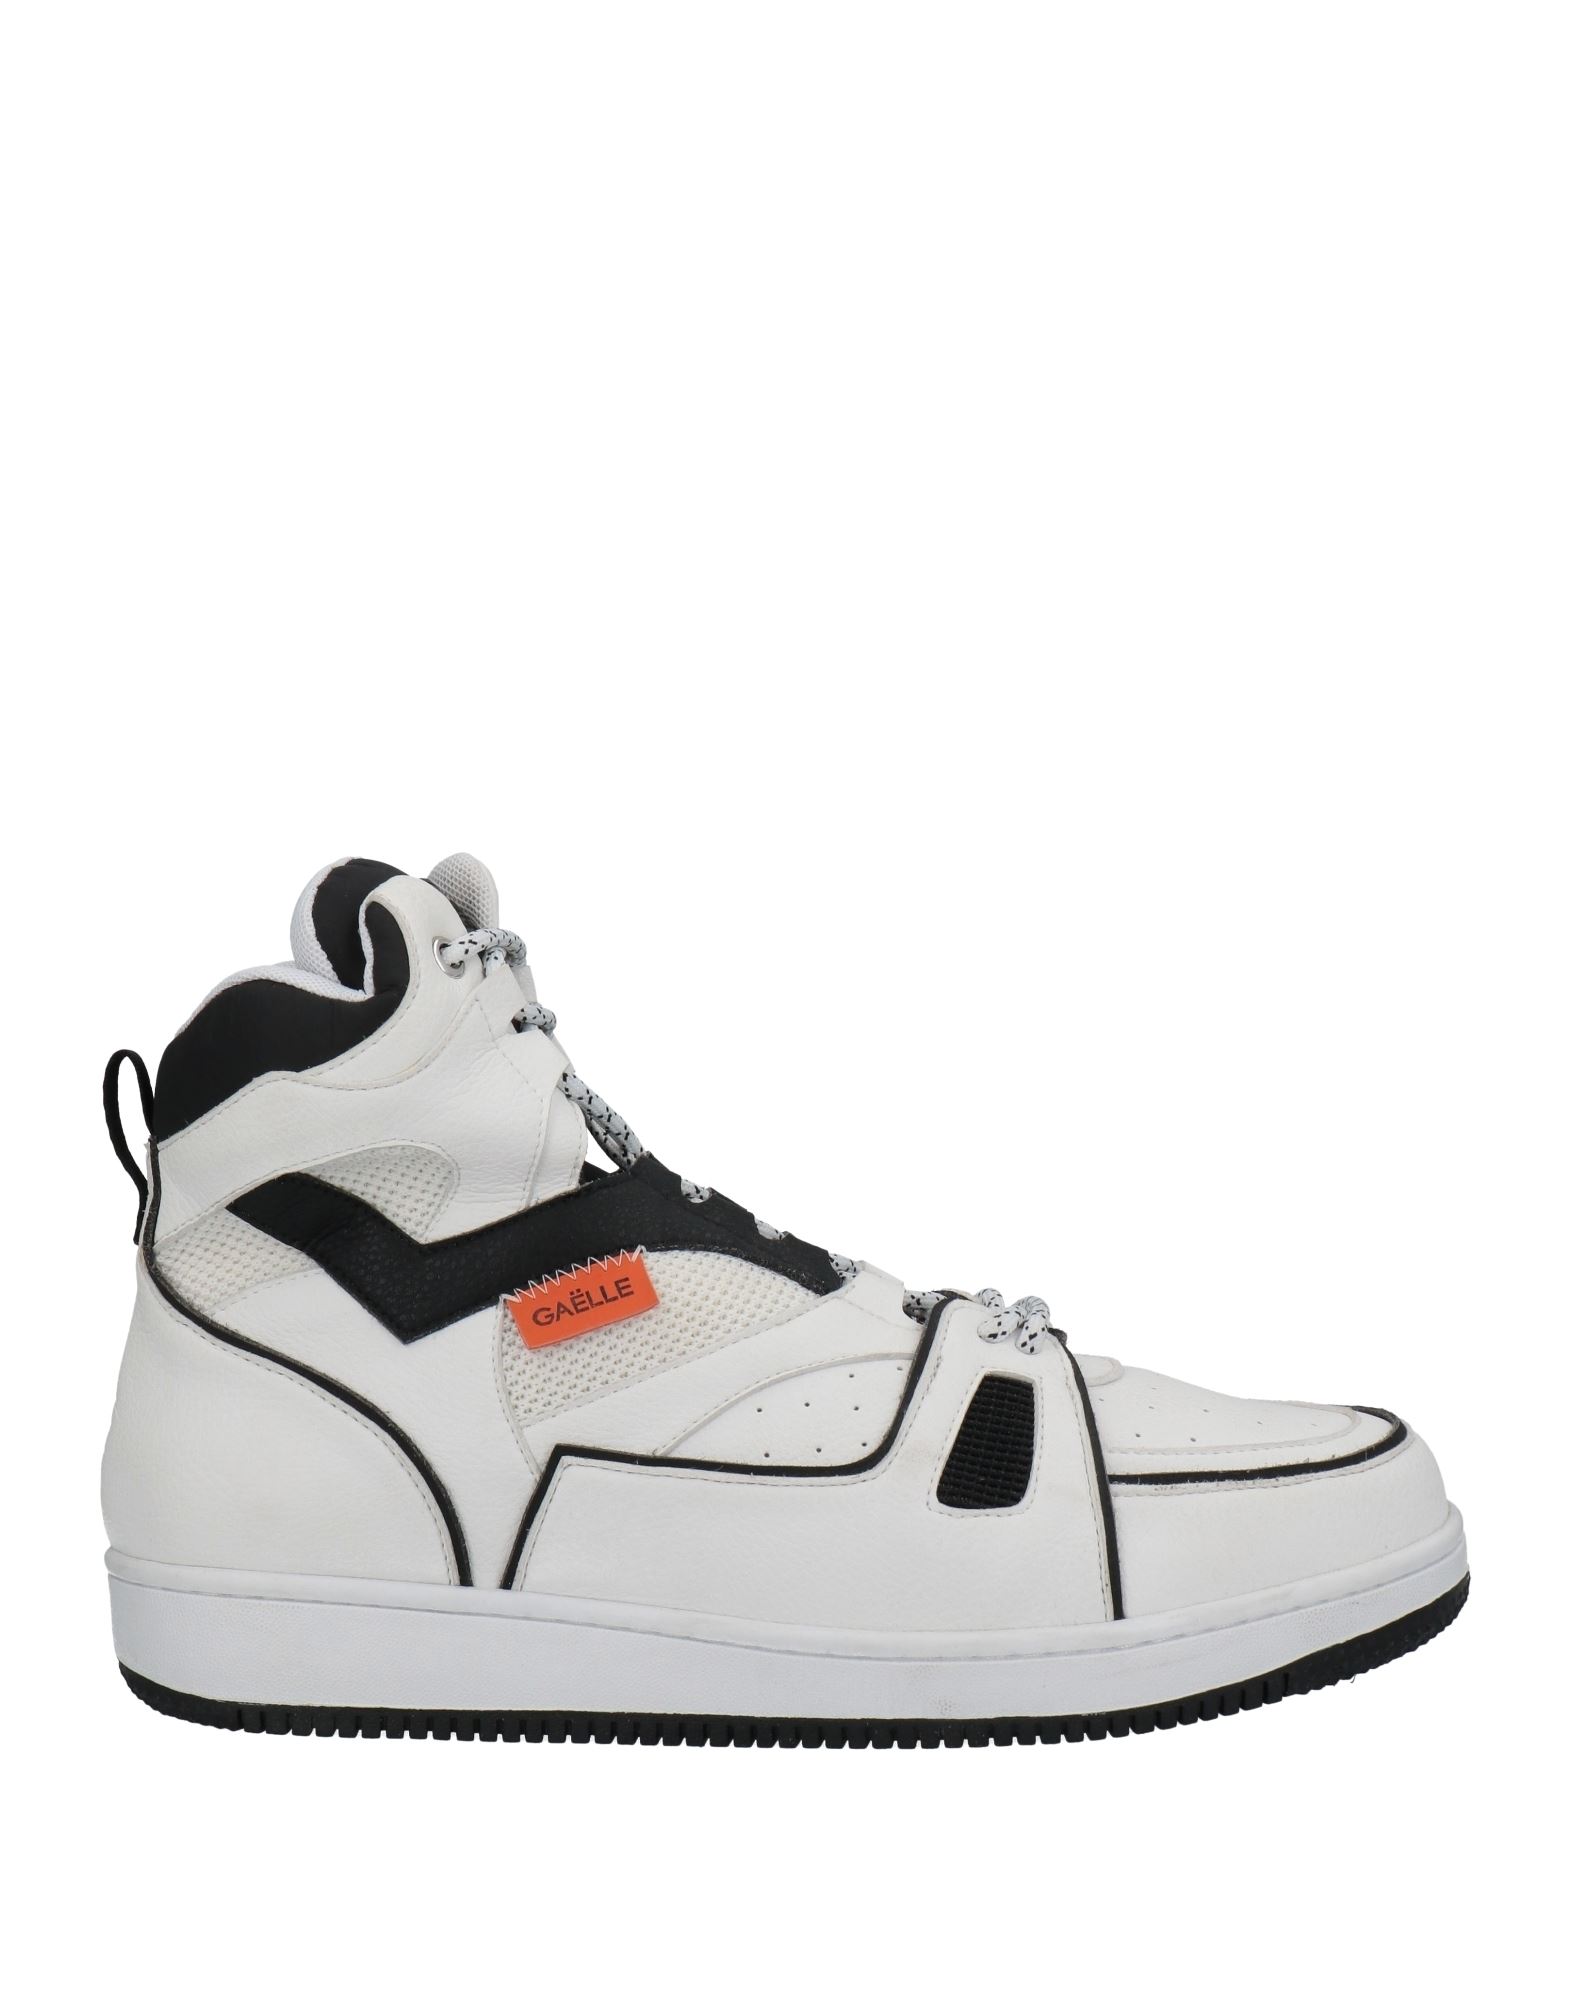 Gaelle Paris Sneakers In White